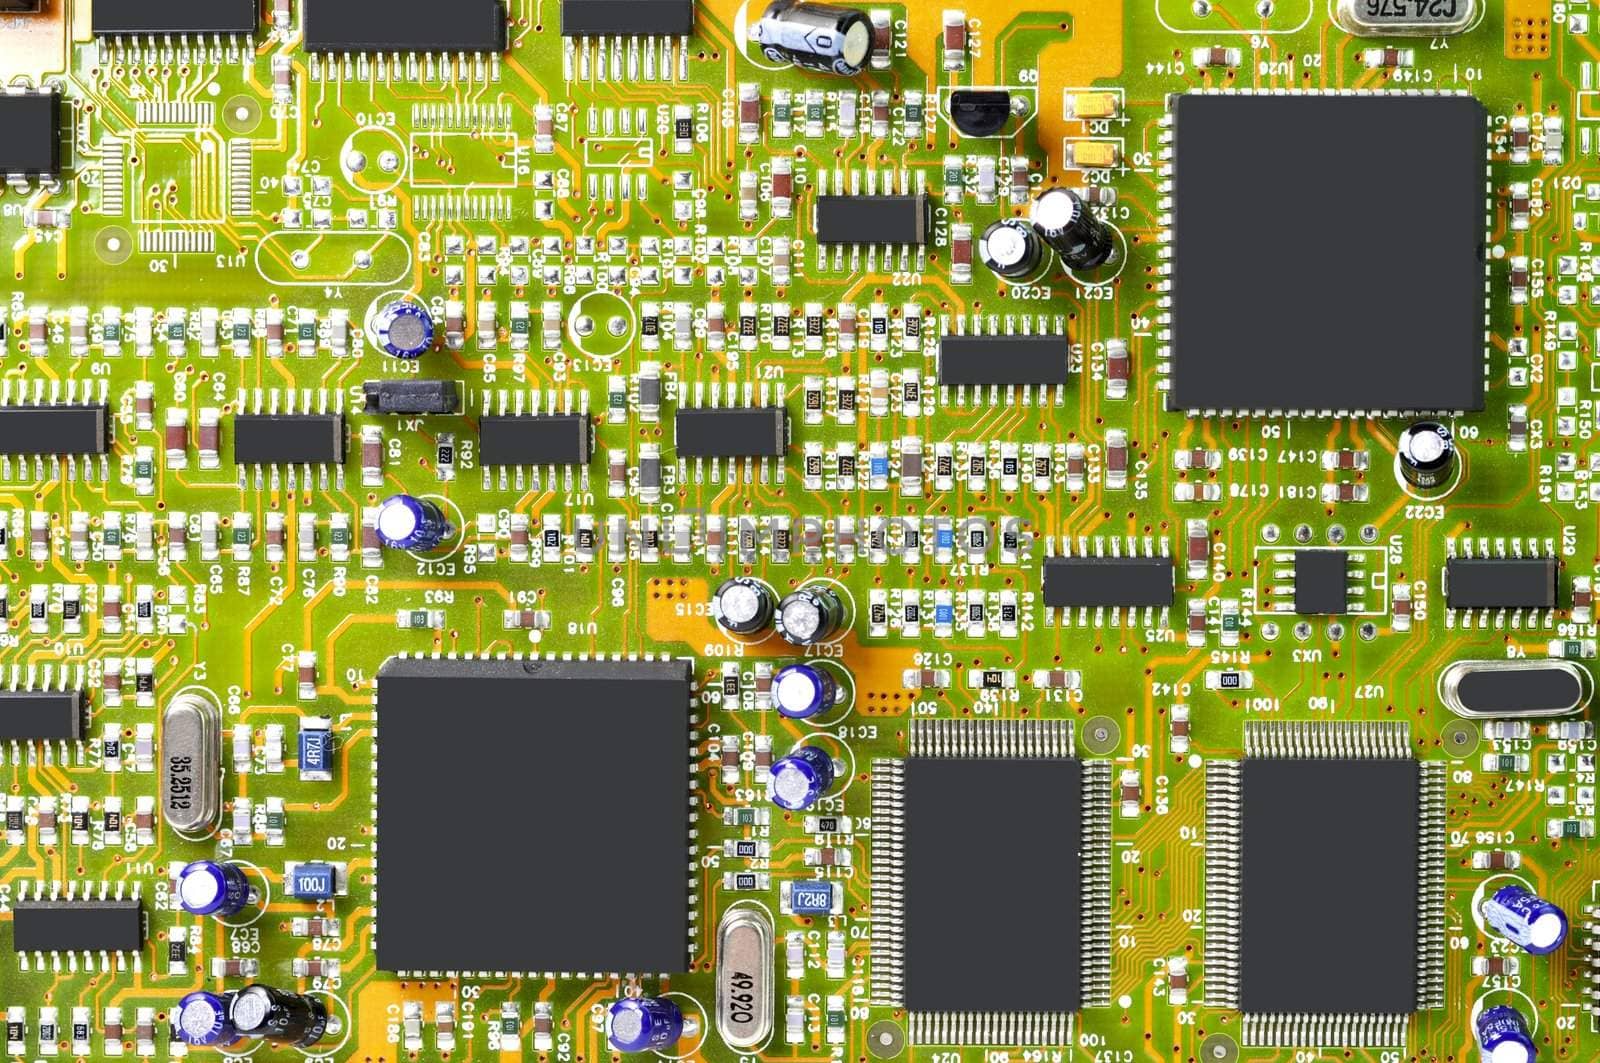 Macro of circuit board.  